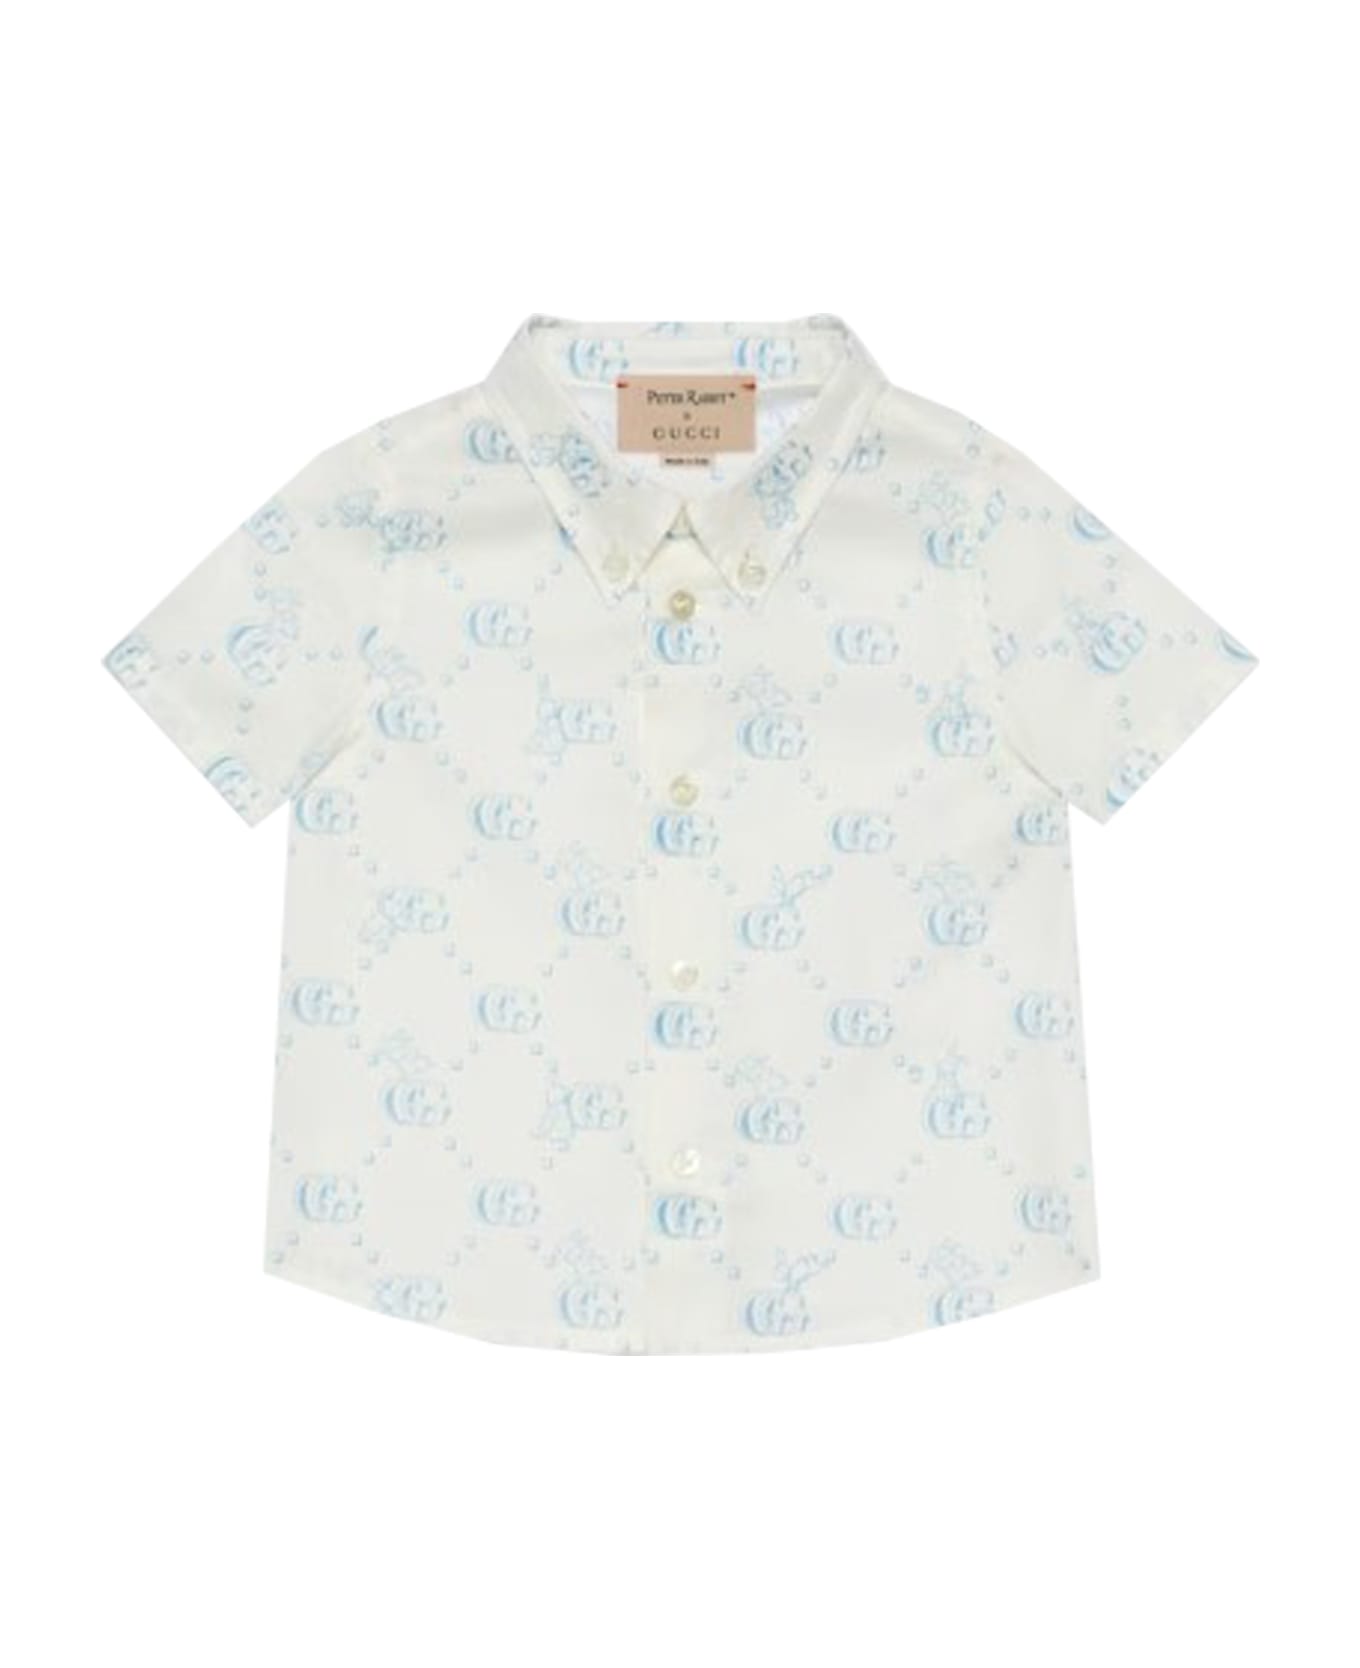 Gucci Cotton Shirt - Avorio シャツ